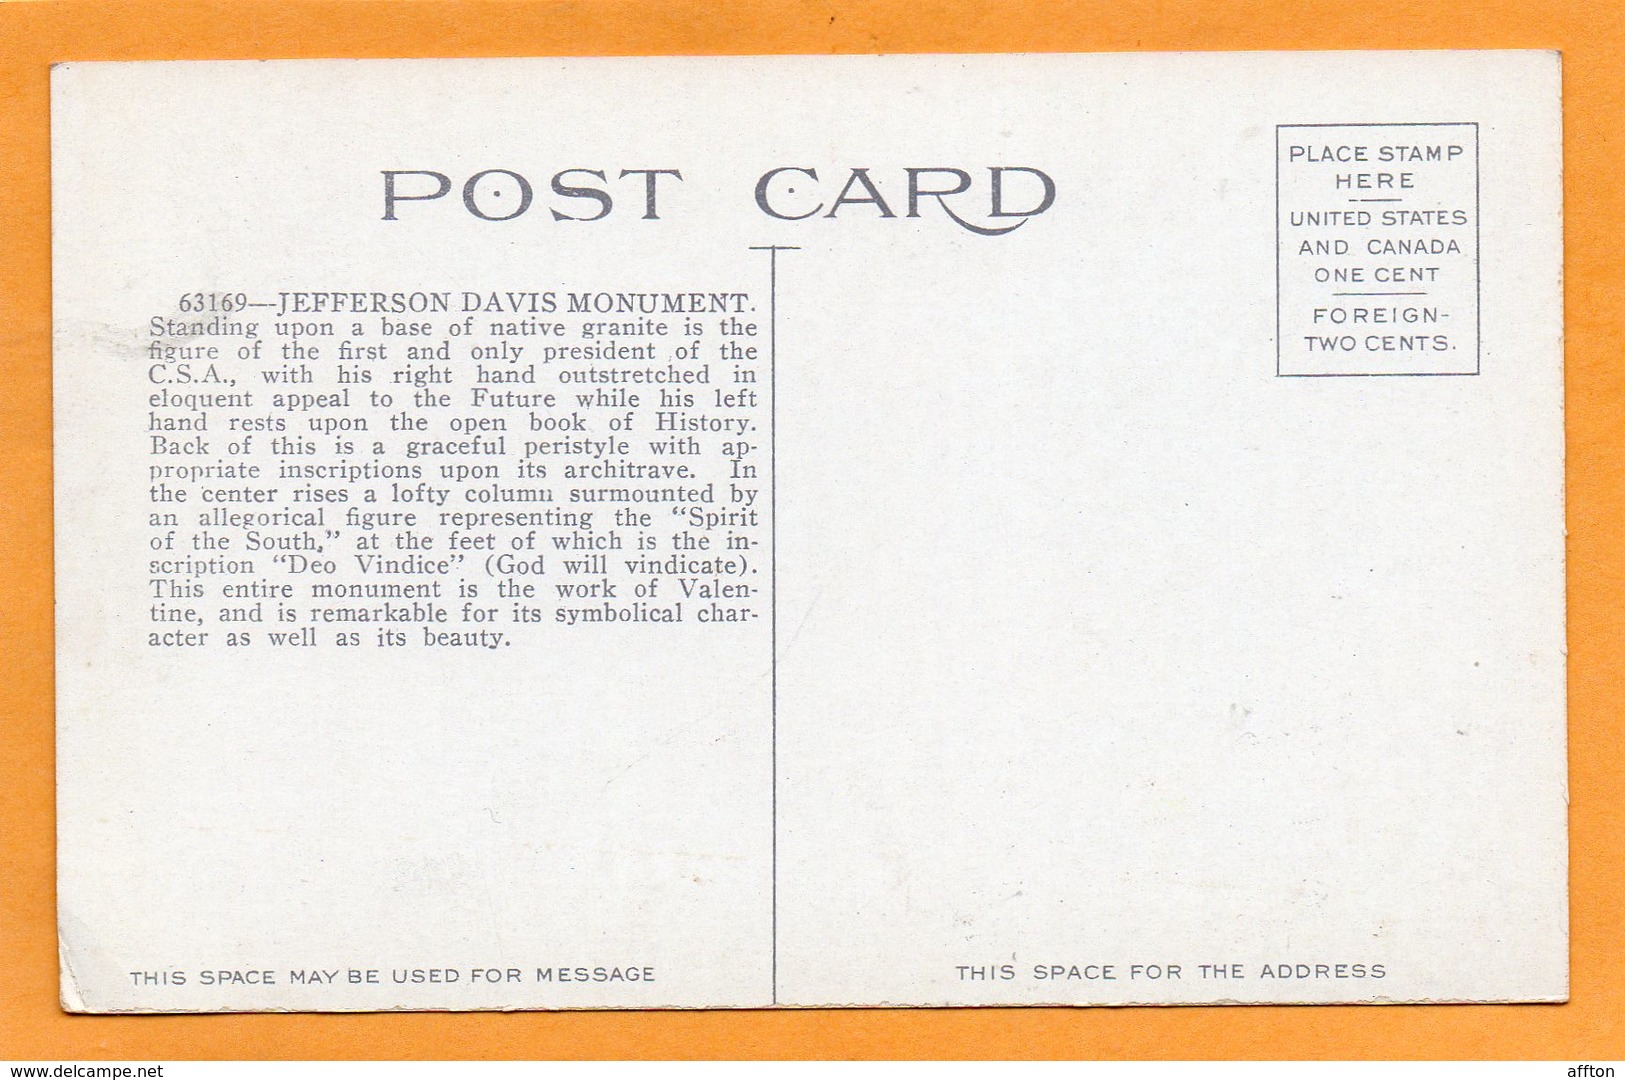 Richmond VA 1907 Postcard - Richmond